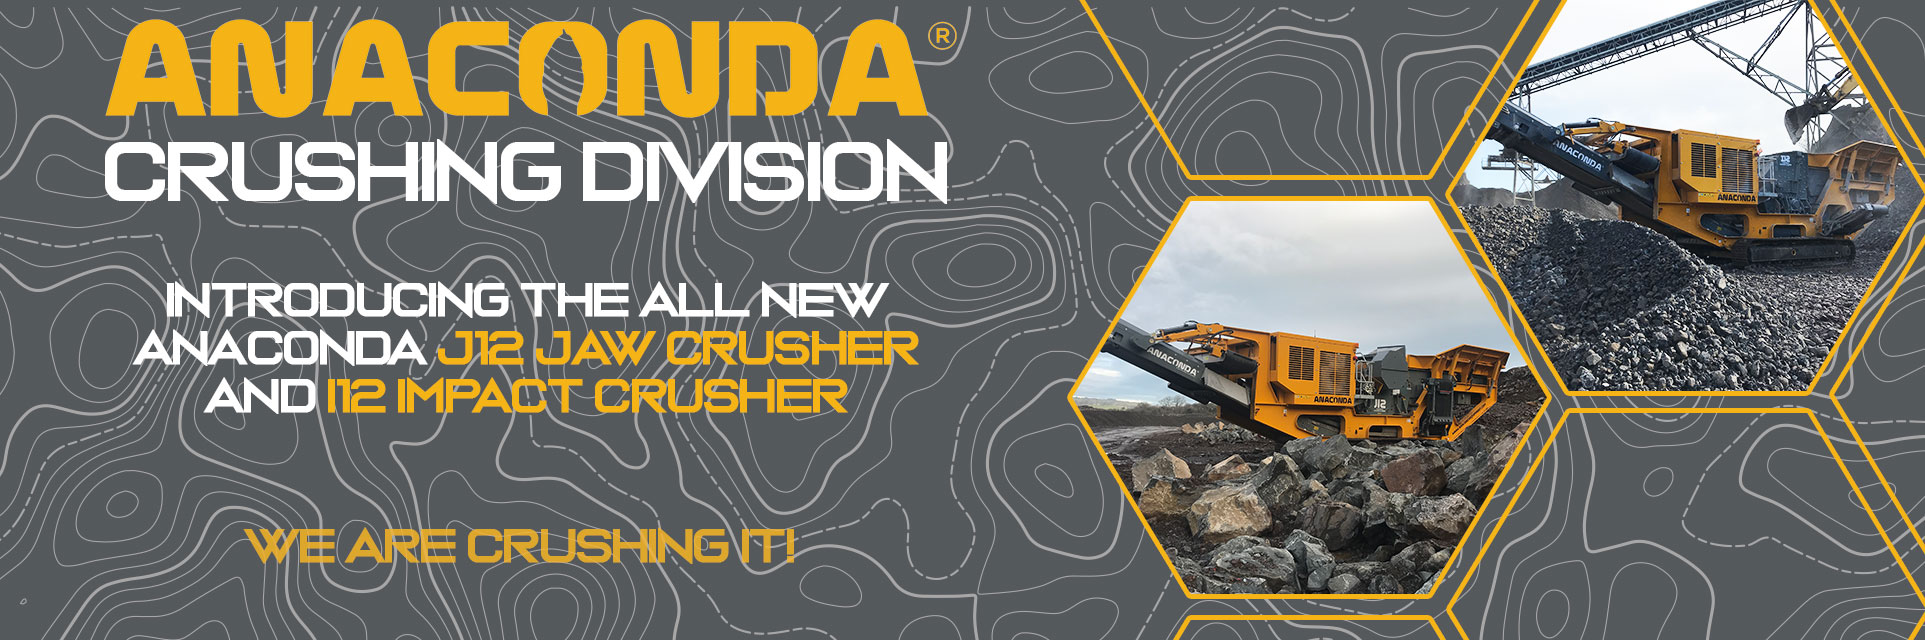 Anaconda Equipment - Crushing Division